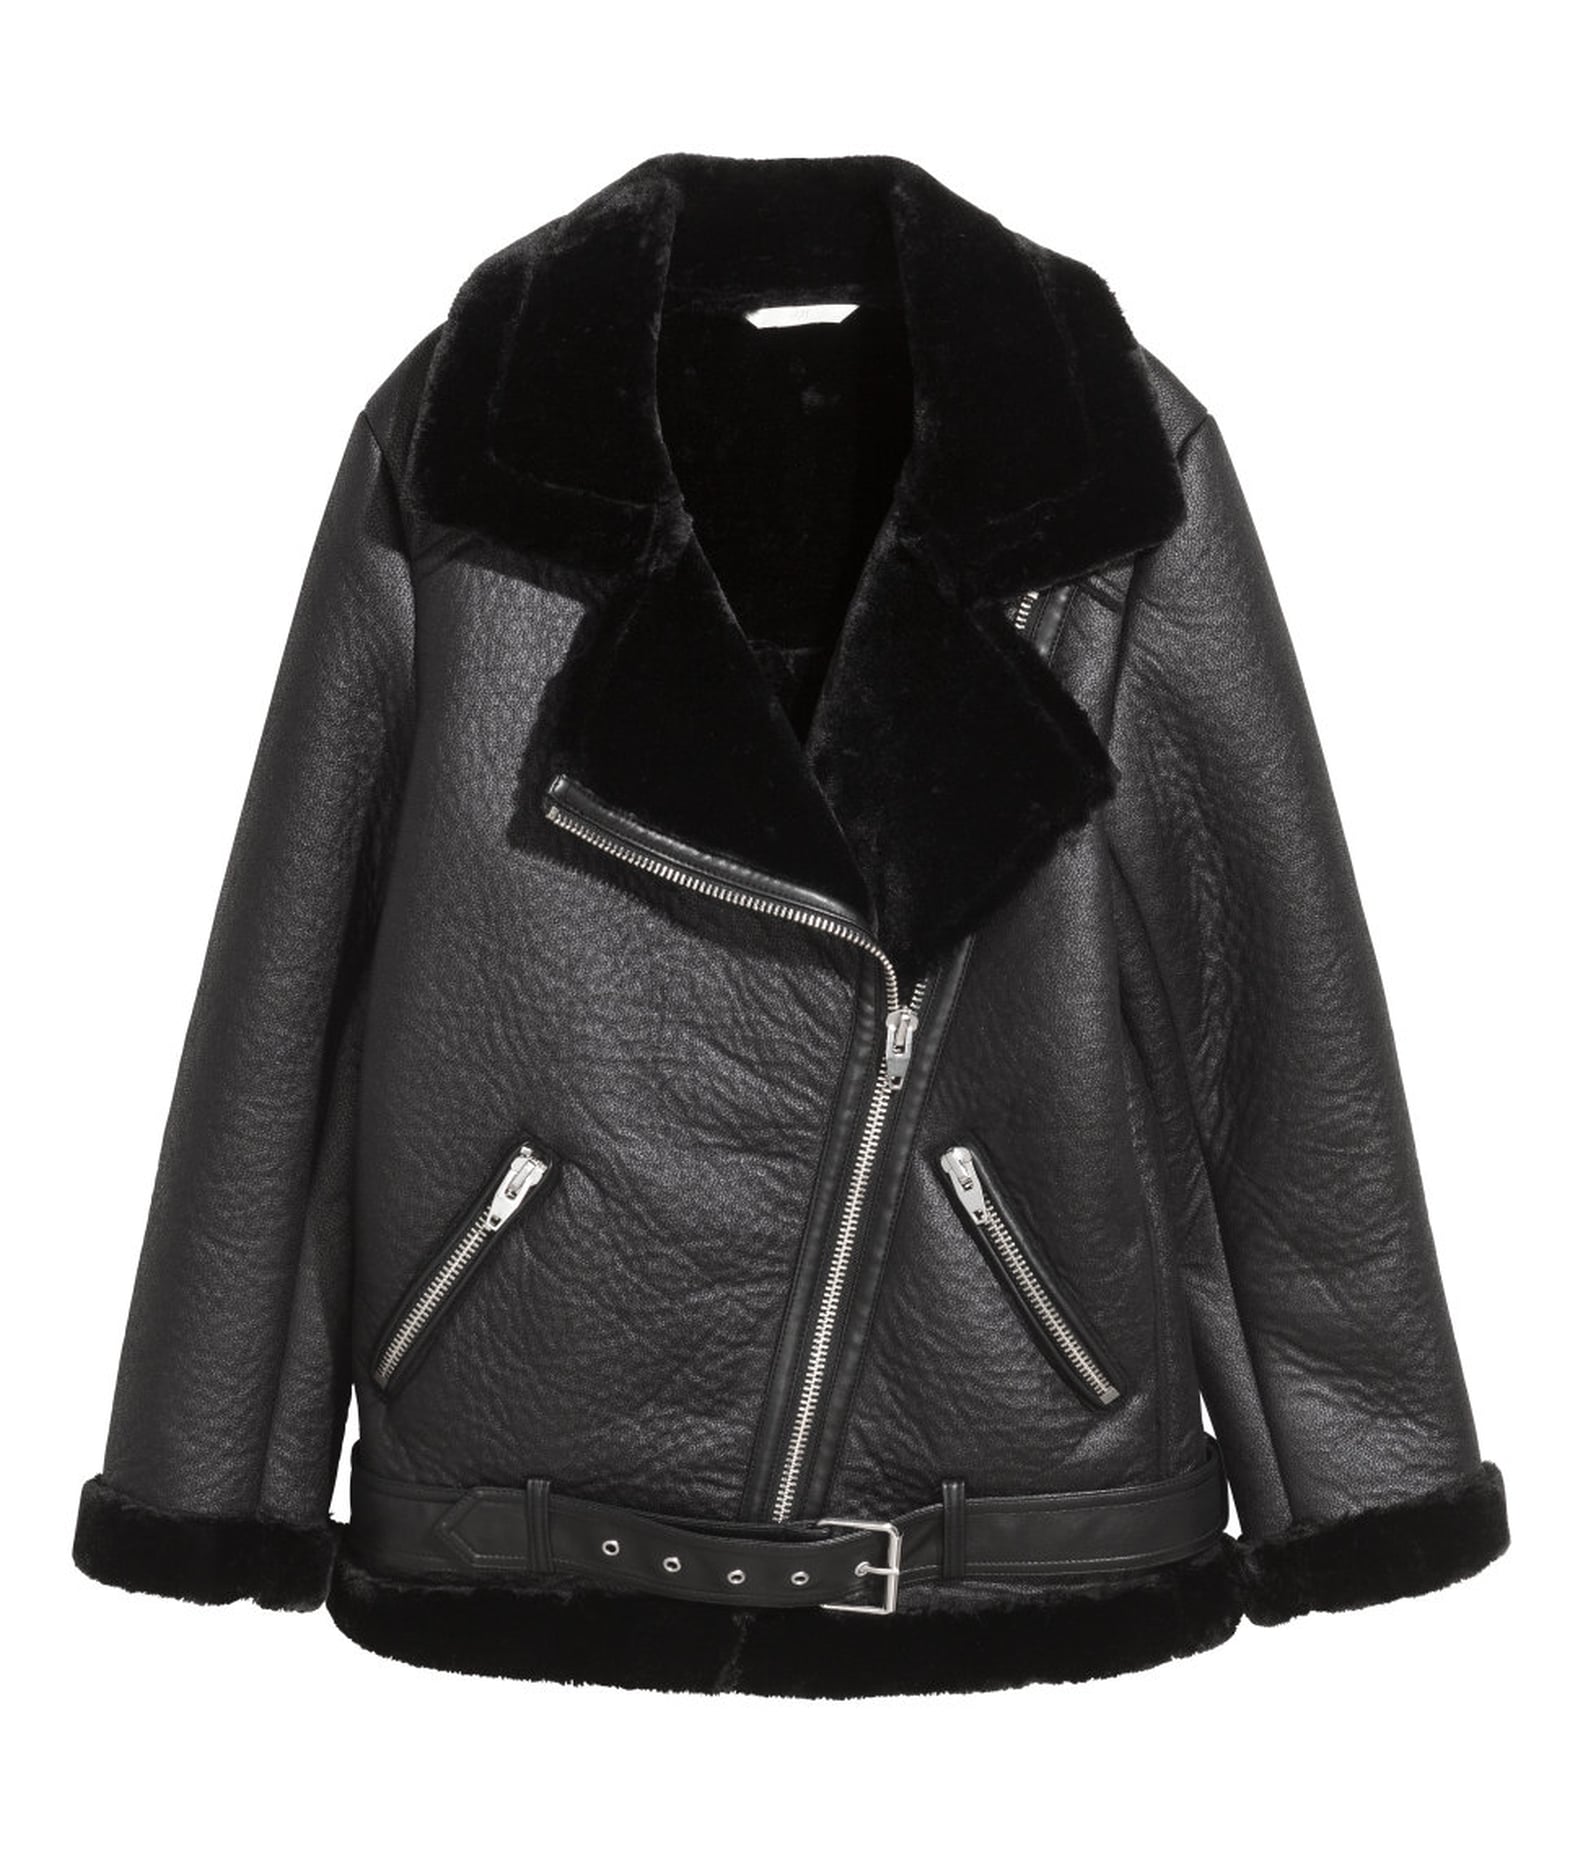 H&M Leather Jacket | POPSUGAR Fashion